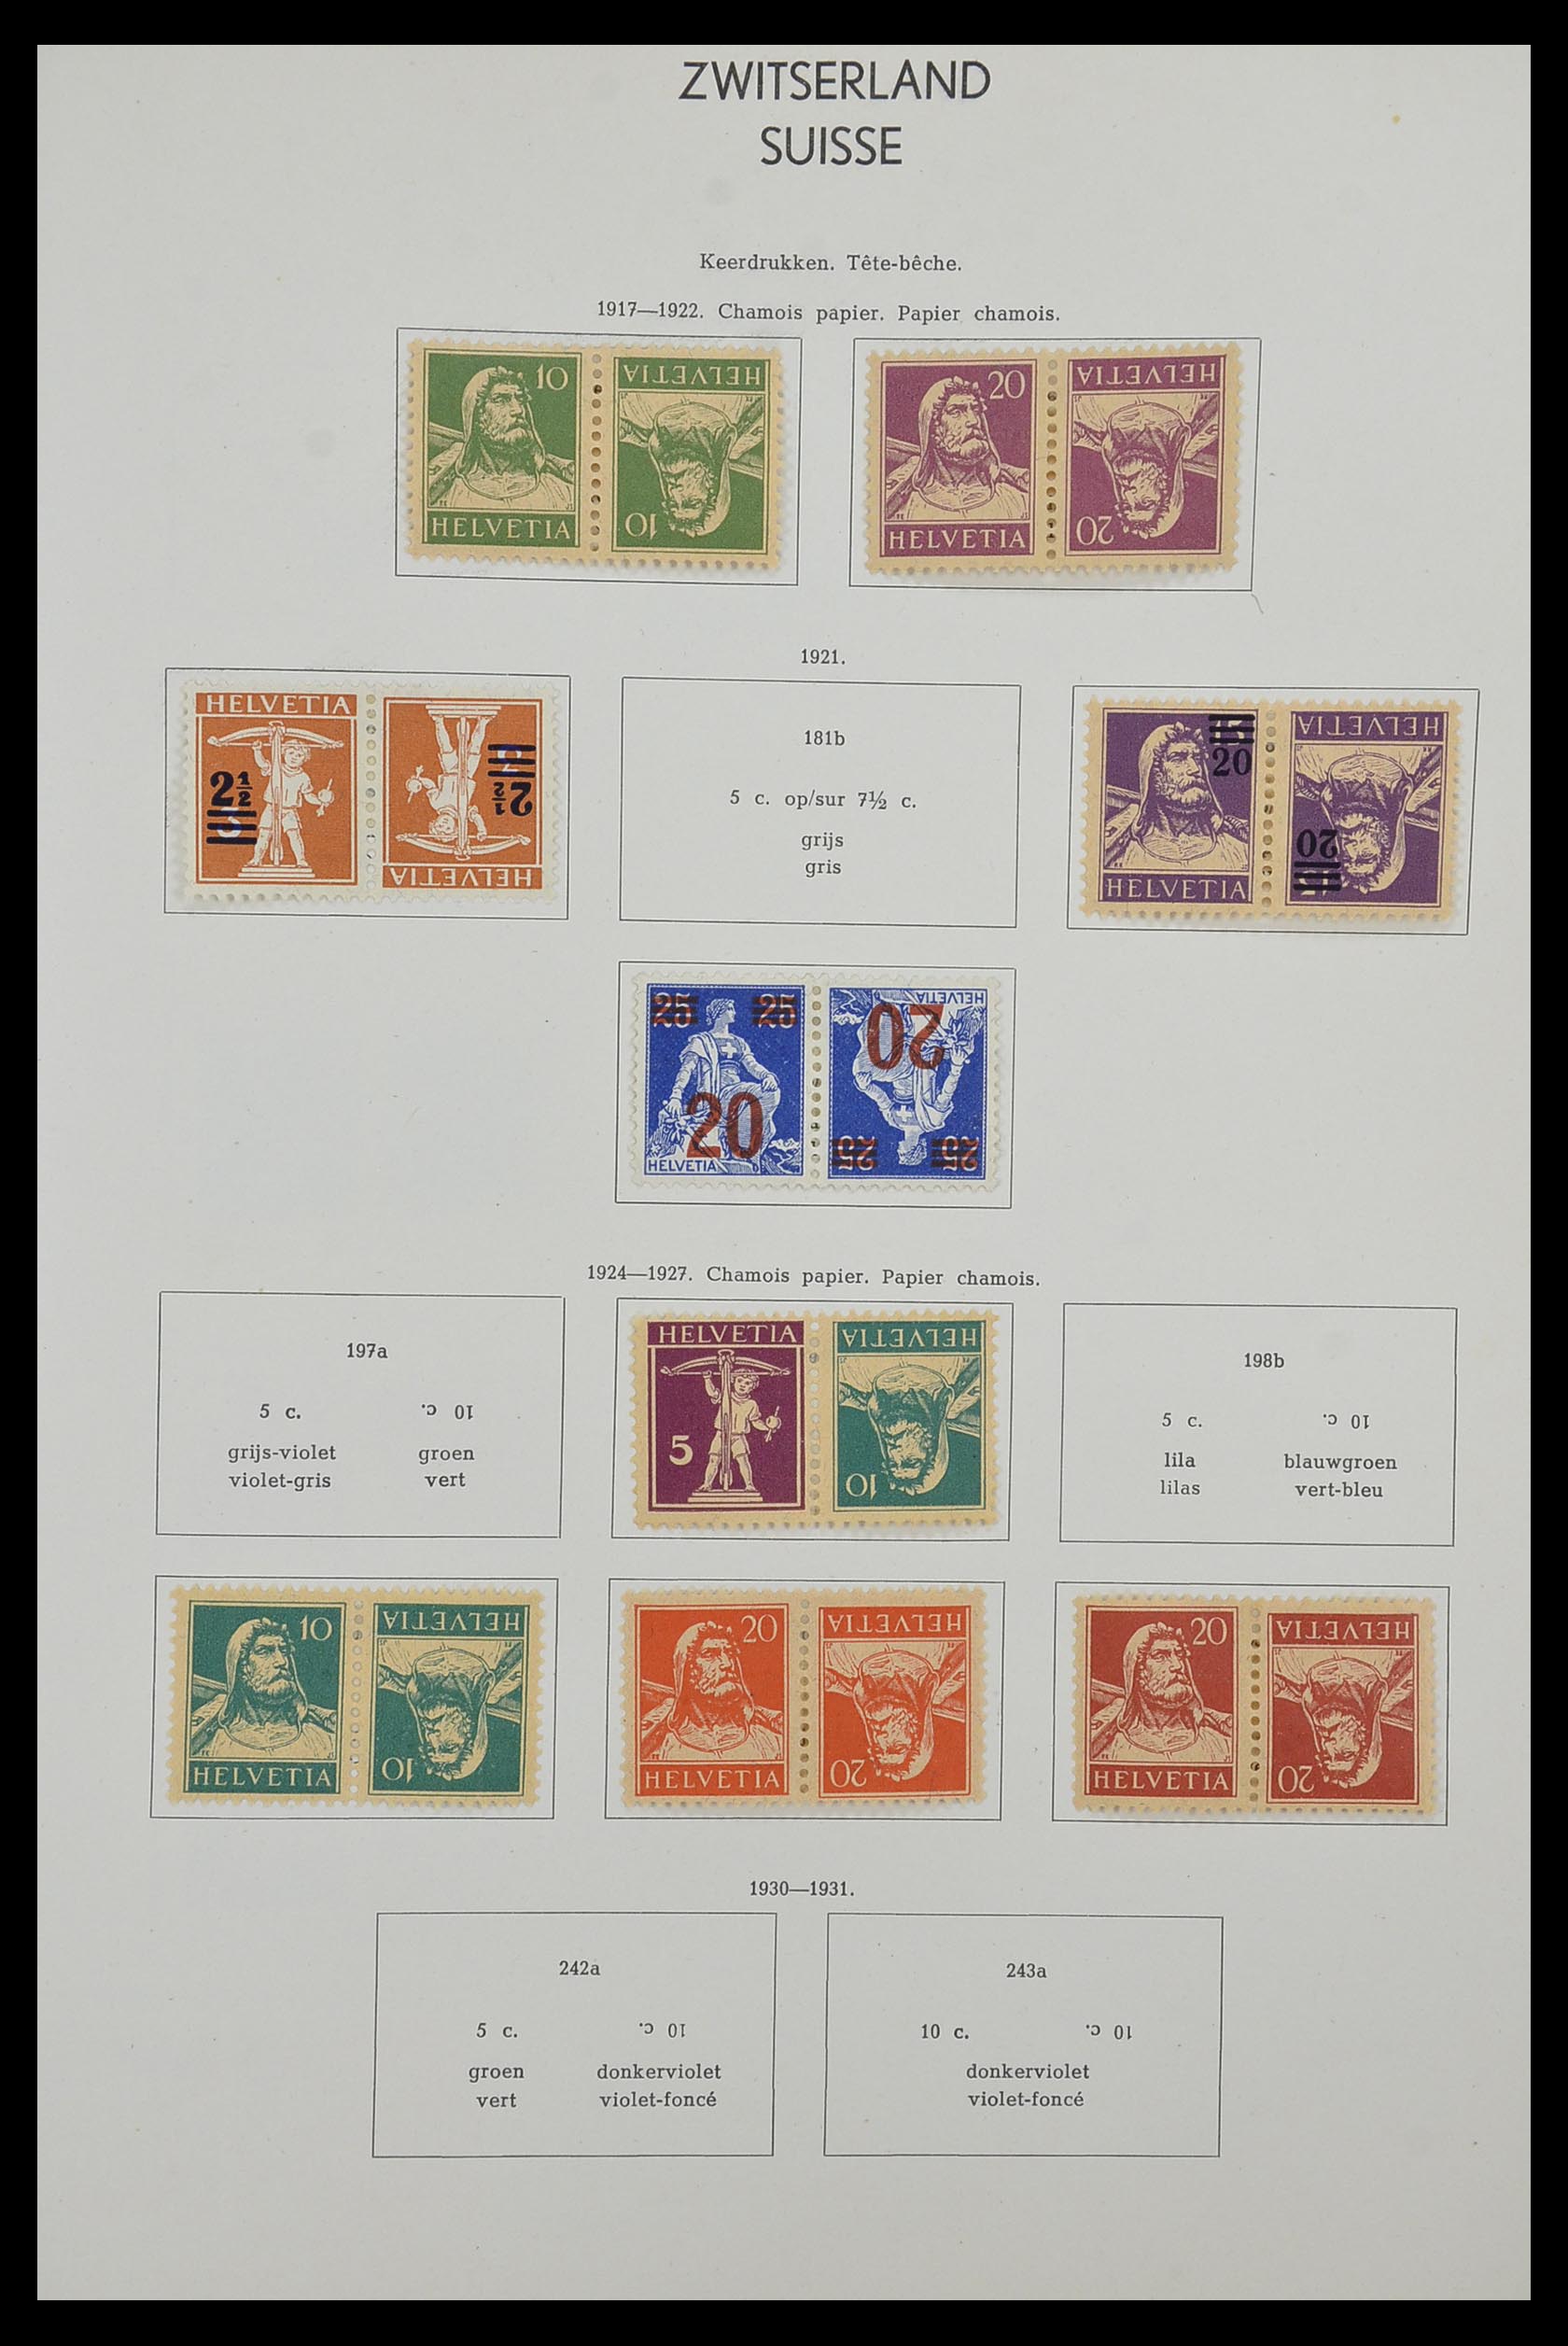 33601 095 - Stamp collection 33601 Switzerland 1854-1985.